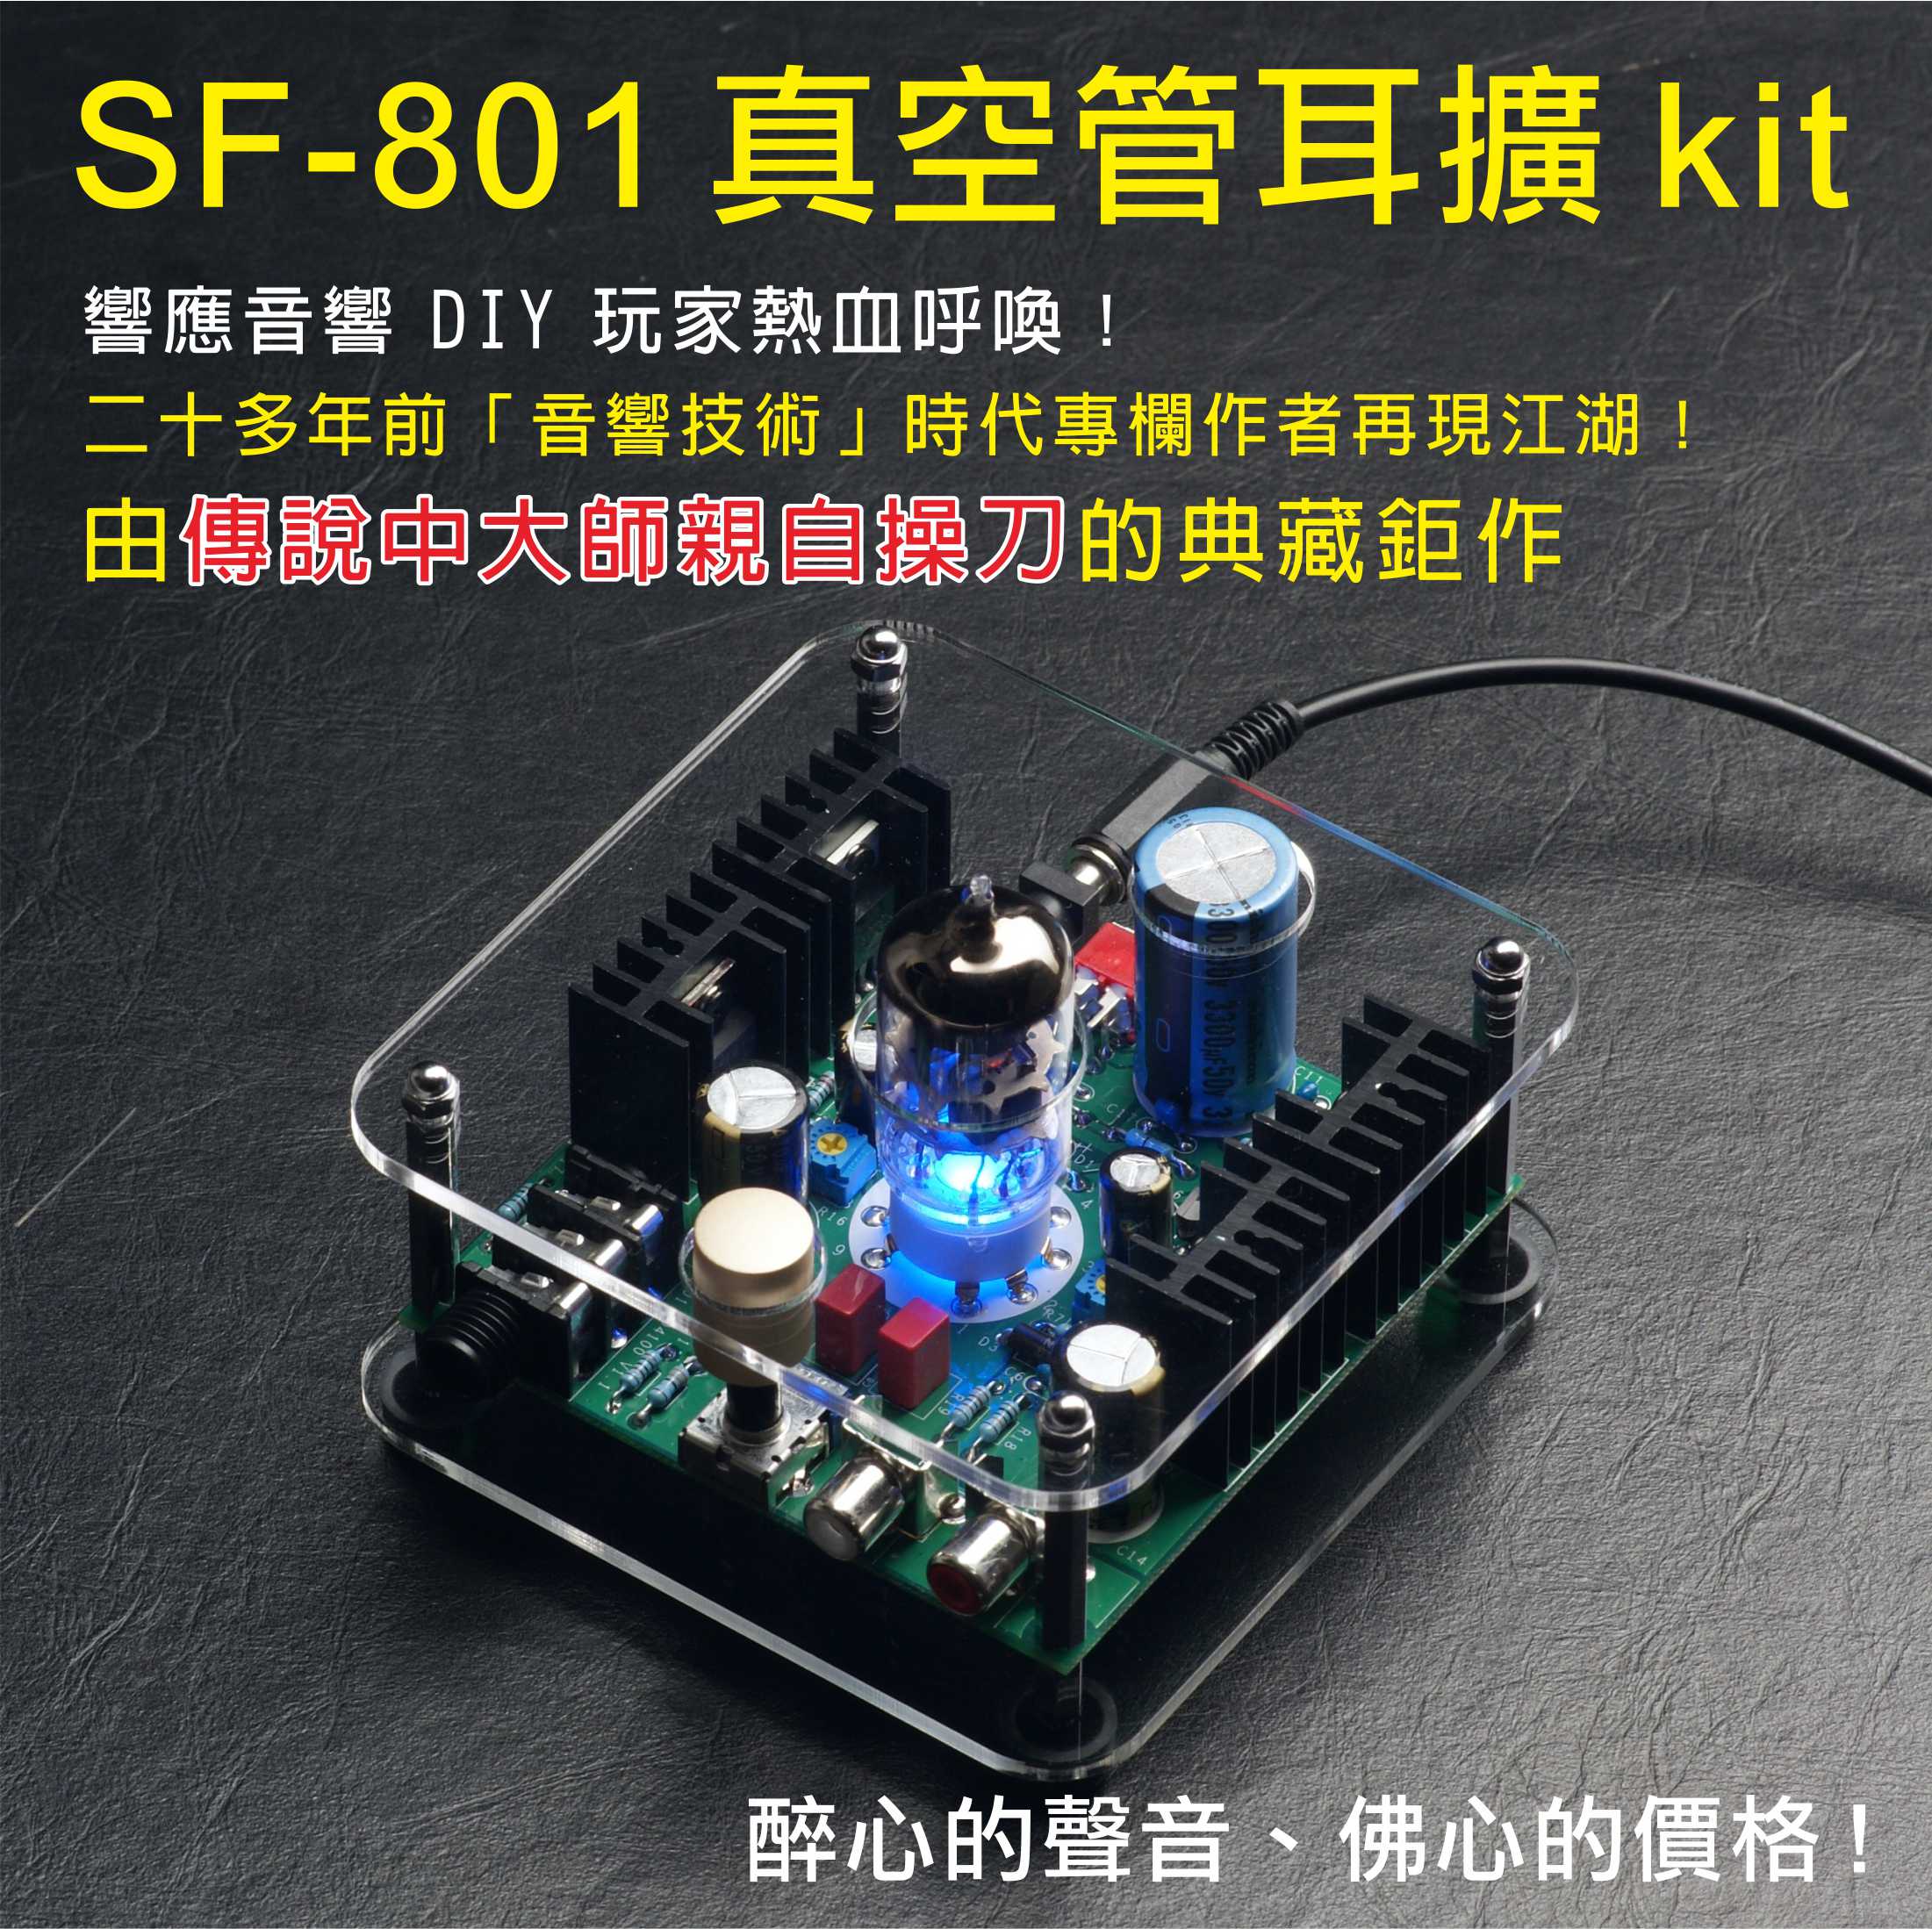 SF-801 真空管耳擴kit【現貨供應中】ECC802S 